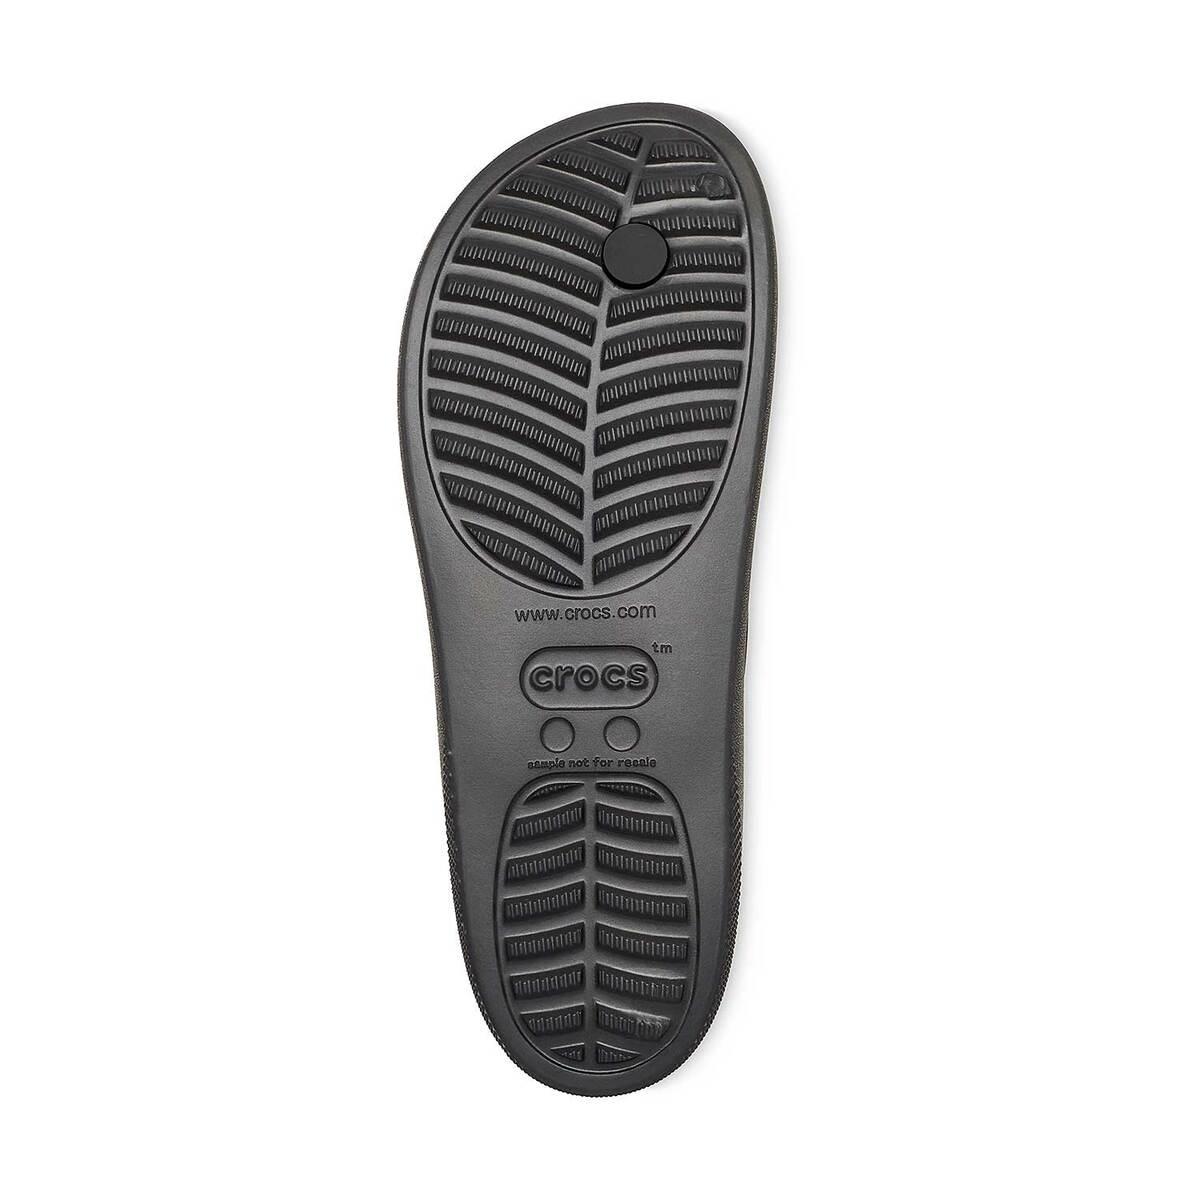 Buy Crocs Women Black Casual Slippers Online | SKU: 118-207714-001-4 ...